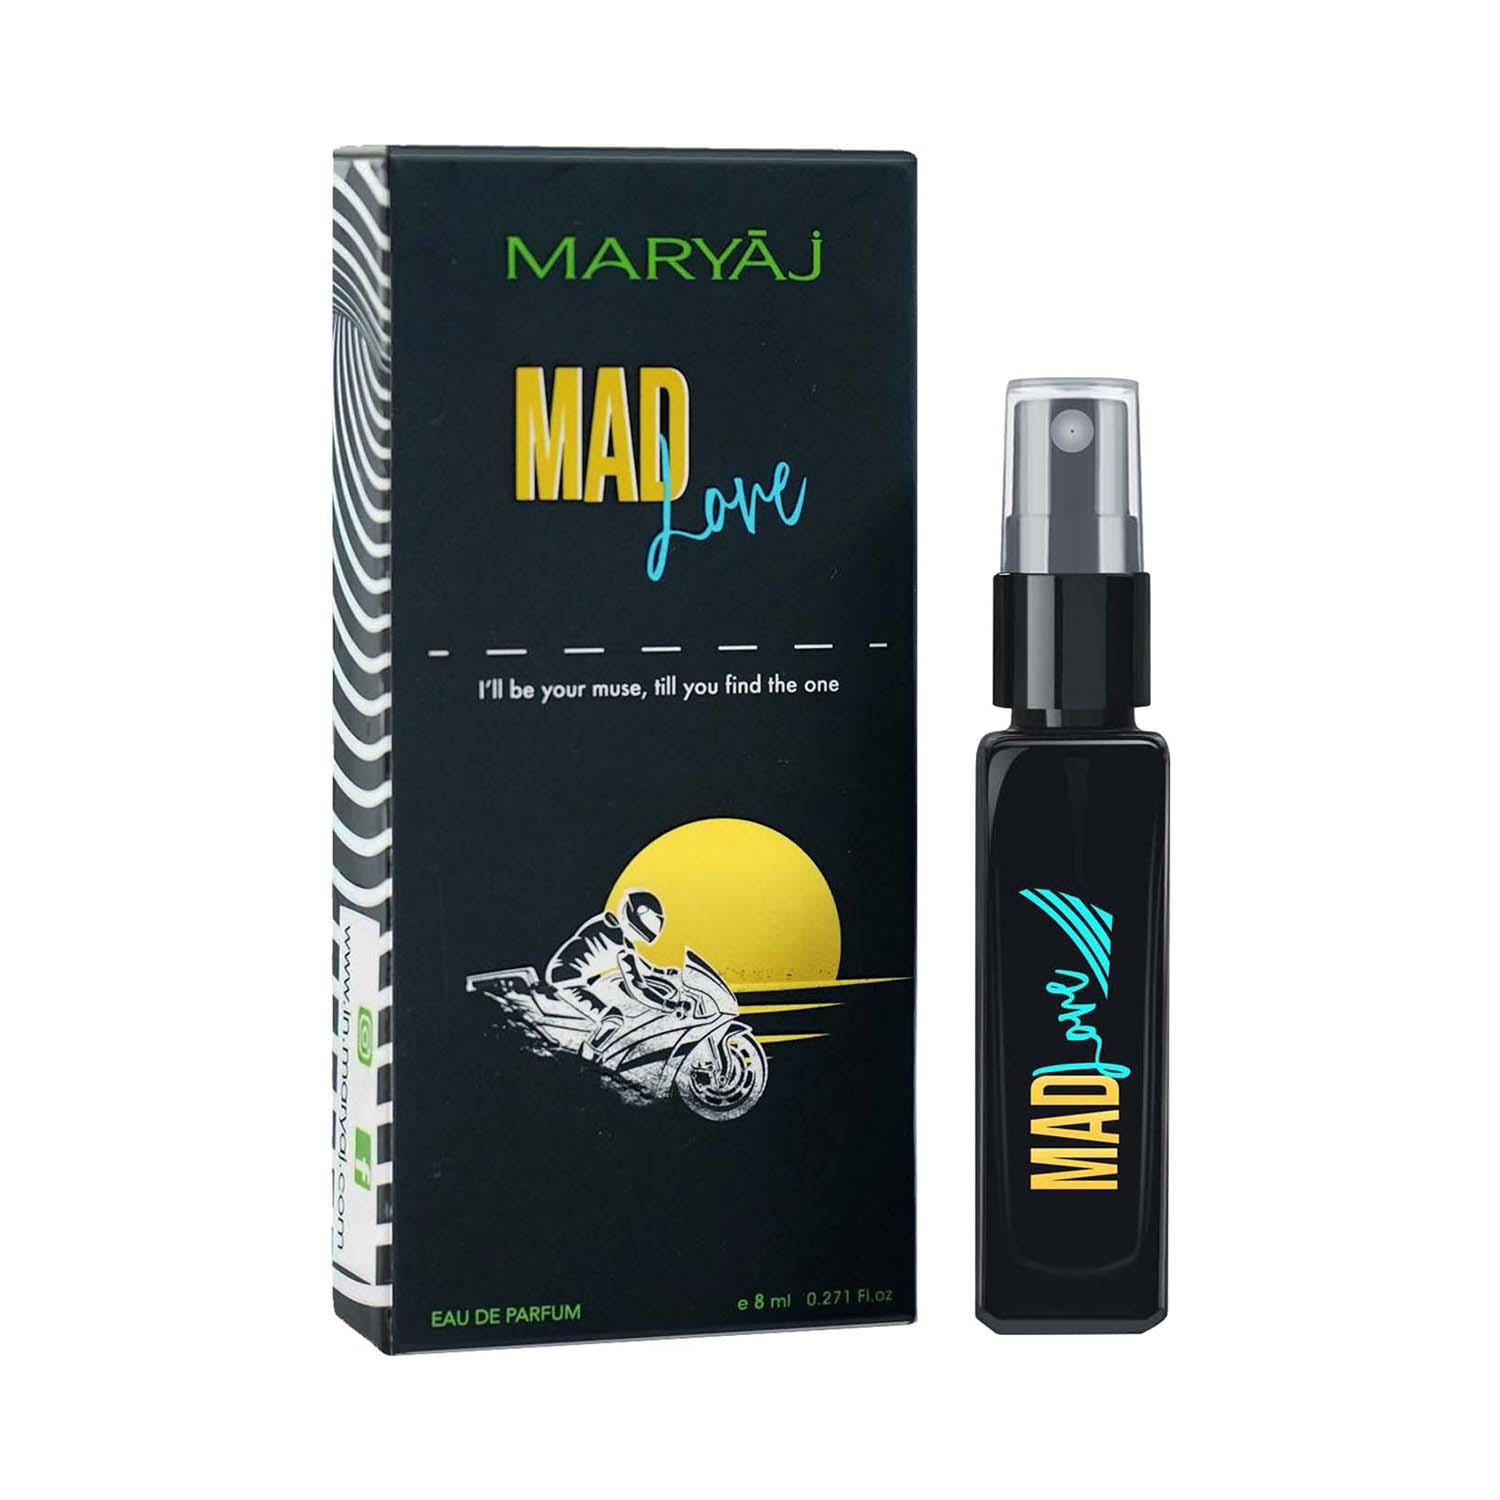 Maryaj Mad Love Gift for Him Eau De Parfum for Men (8 ml)